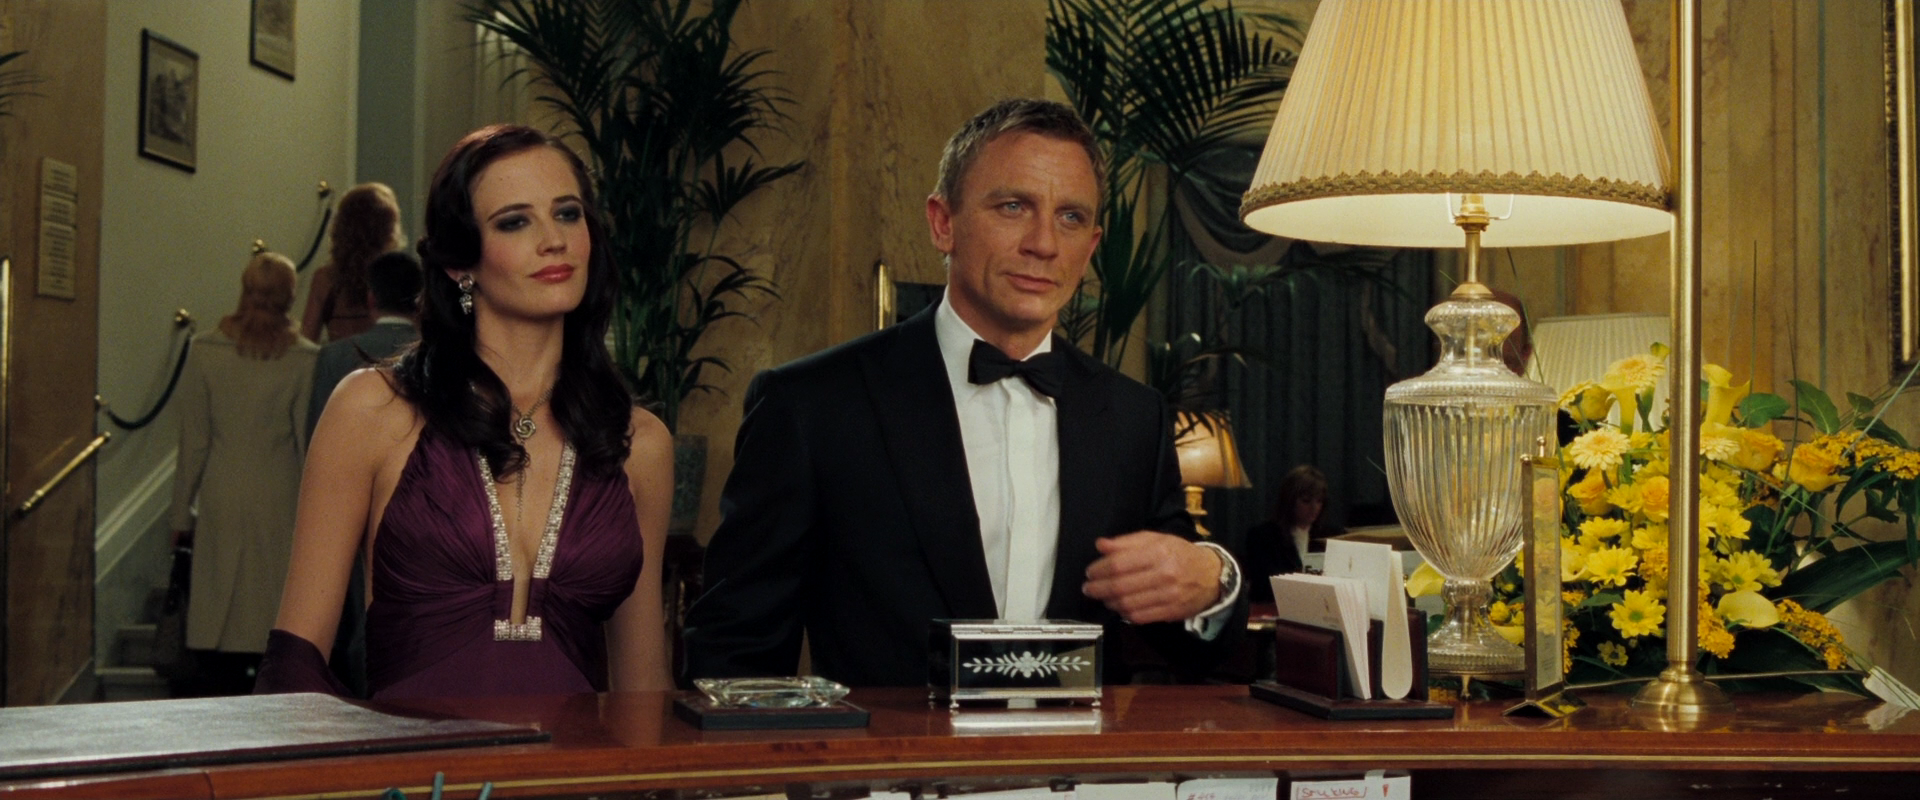 James Bond & Vesper Lynd in Casino Royale (2006)